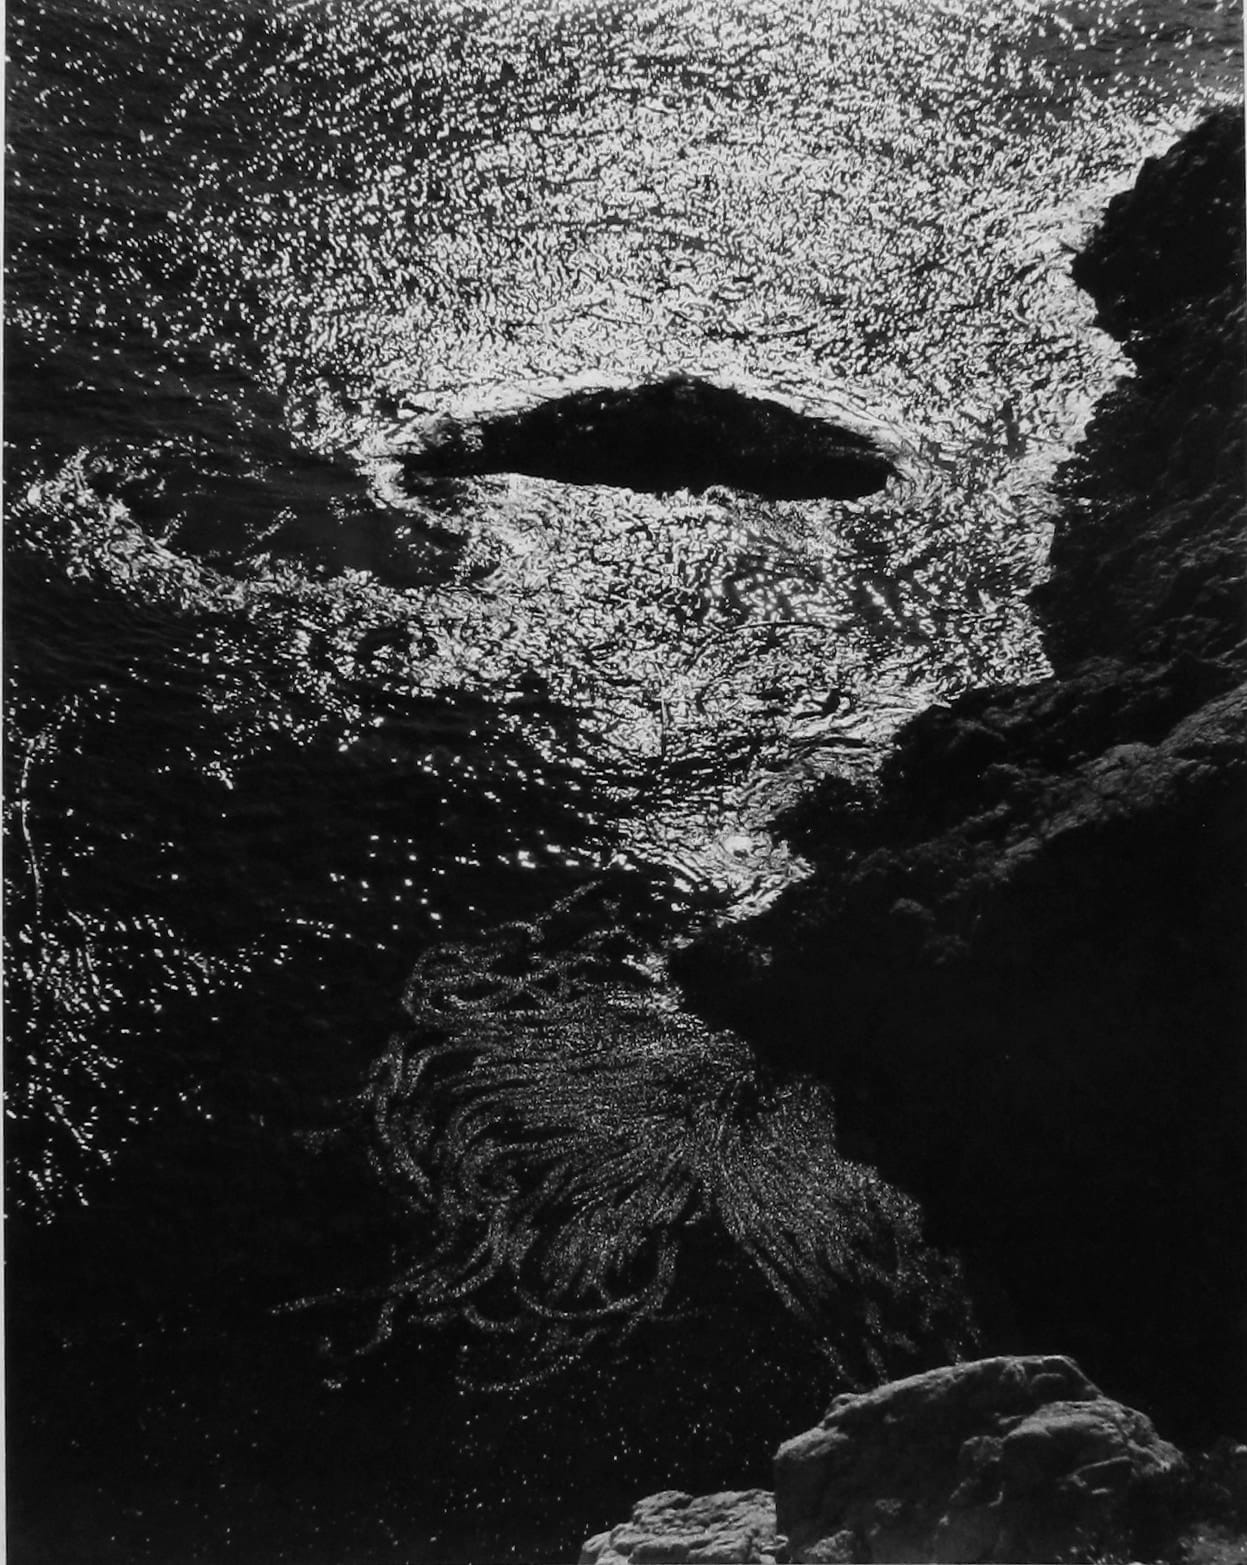 Edward Weston, Kelp, Point Lobos, 1940